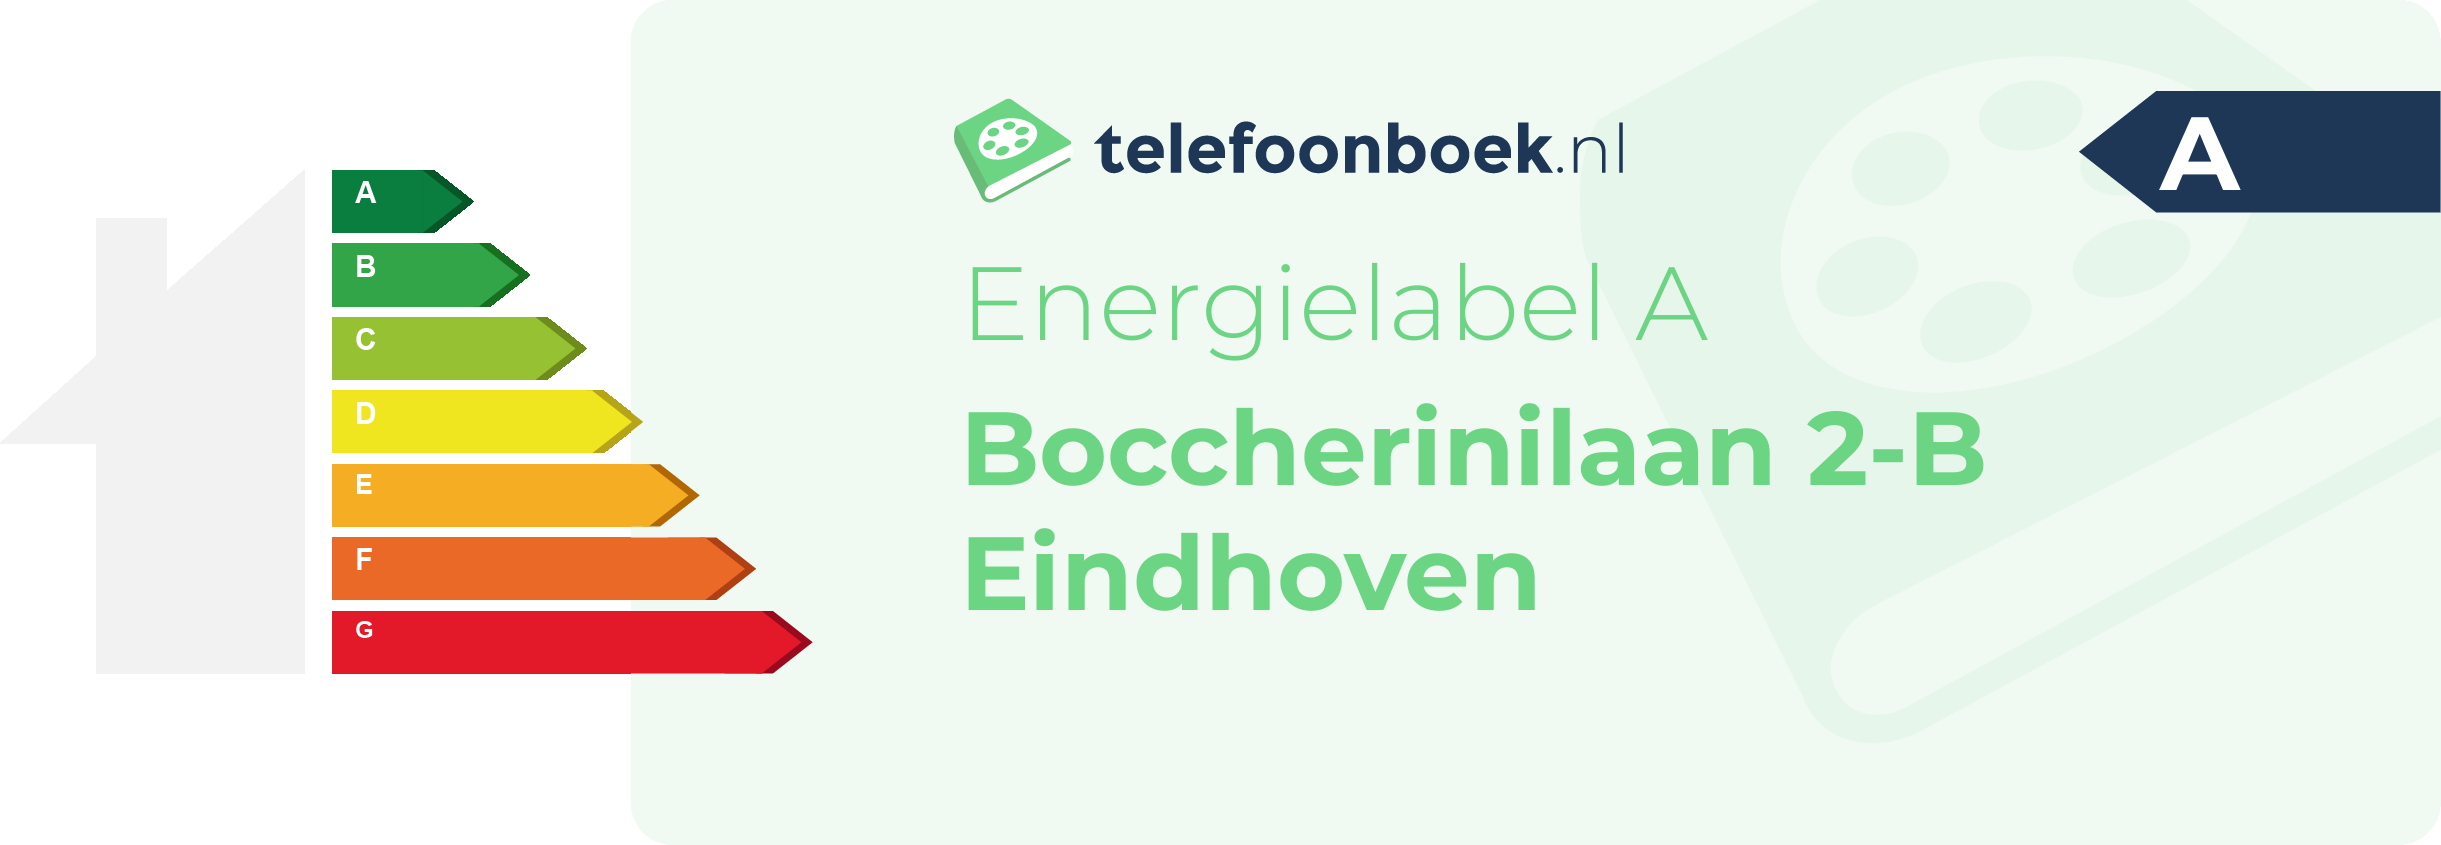 Energielabel Boccherinilaan 2-B Eindhoven